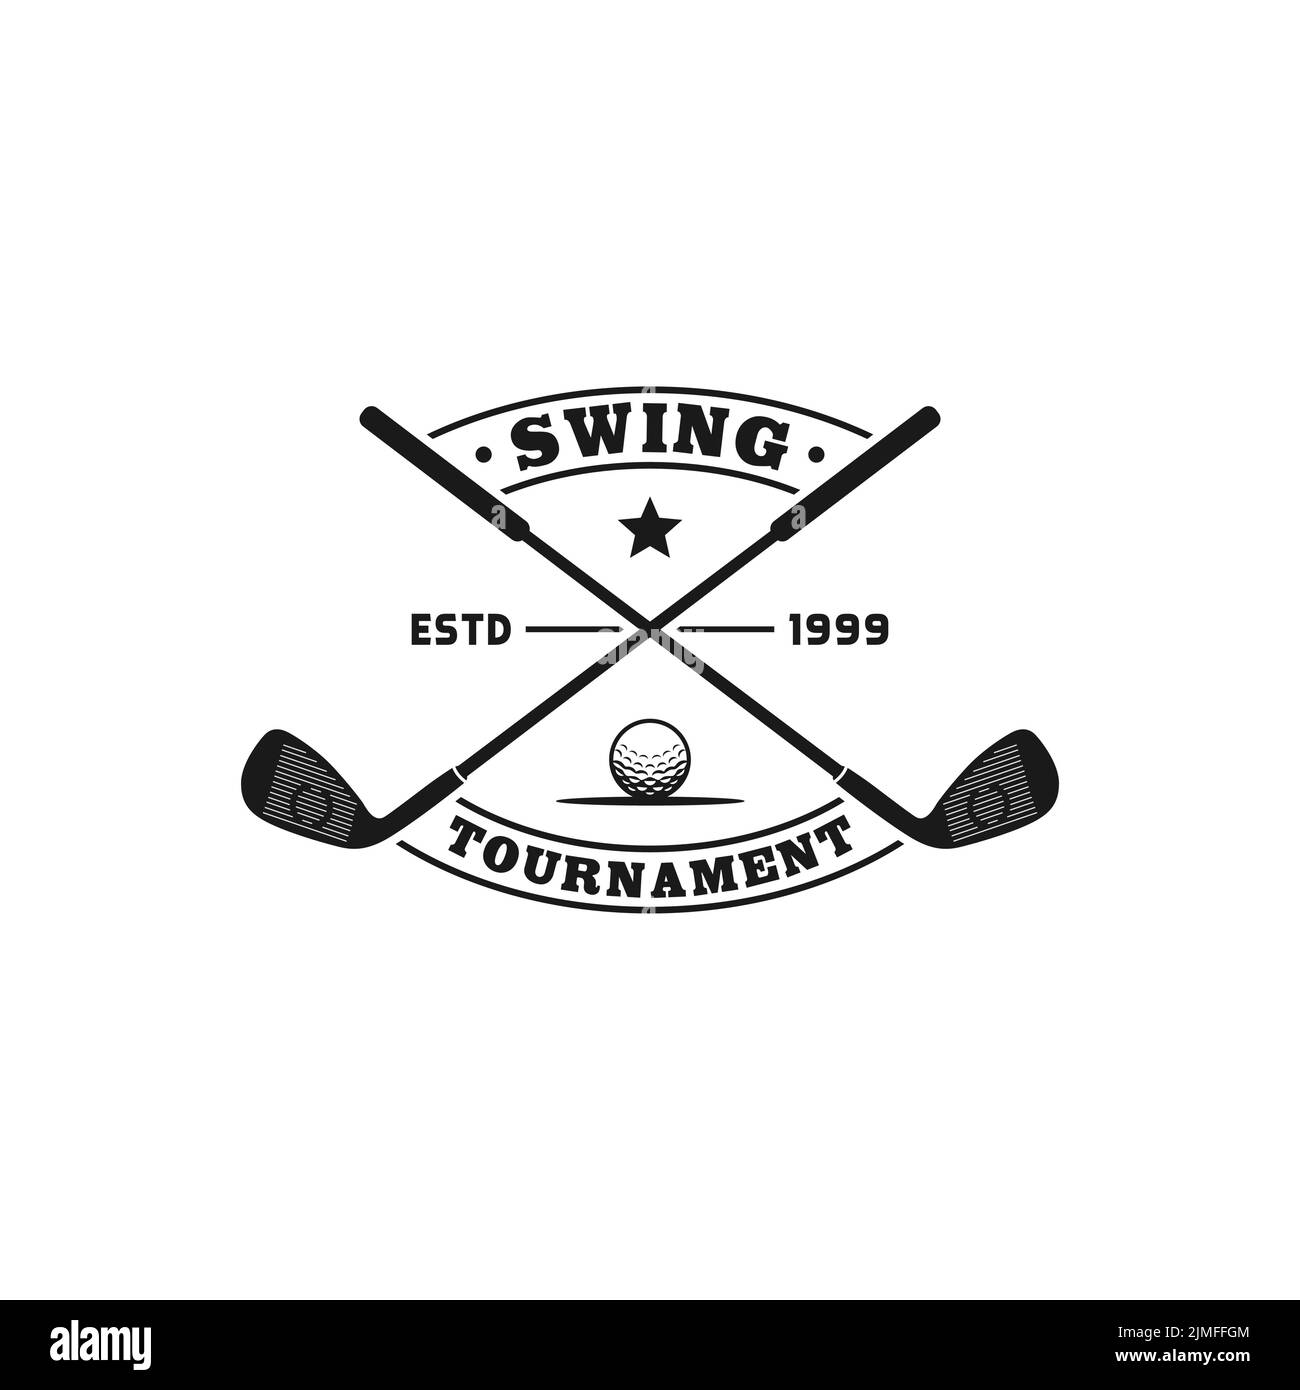 crossed stick golf logo badge label design Stock Vector